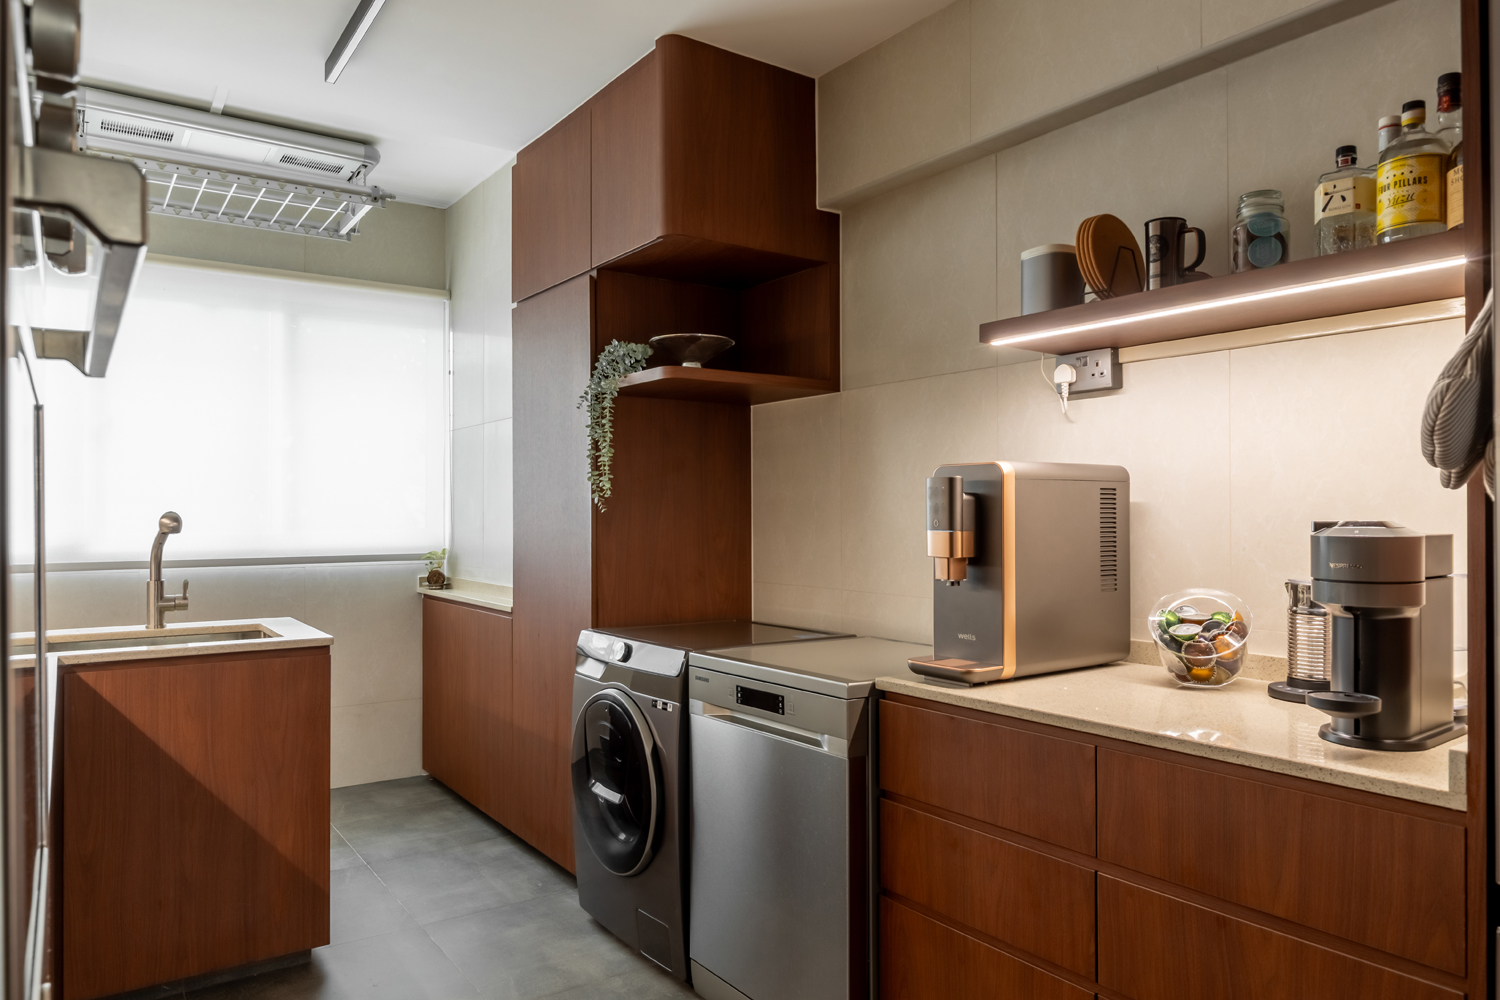 Industrial, Others, Scandinavian Design - Kitchen - HDB 4 Room - Design by U-Home Interior Design Pte Ltd